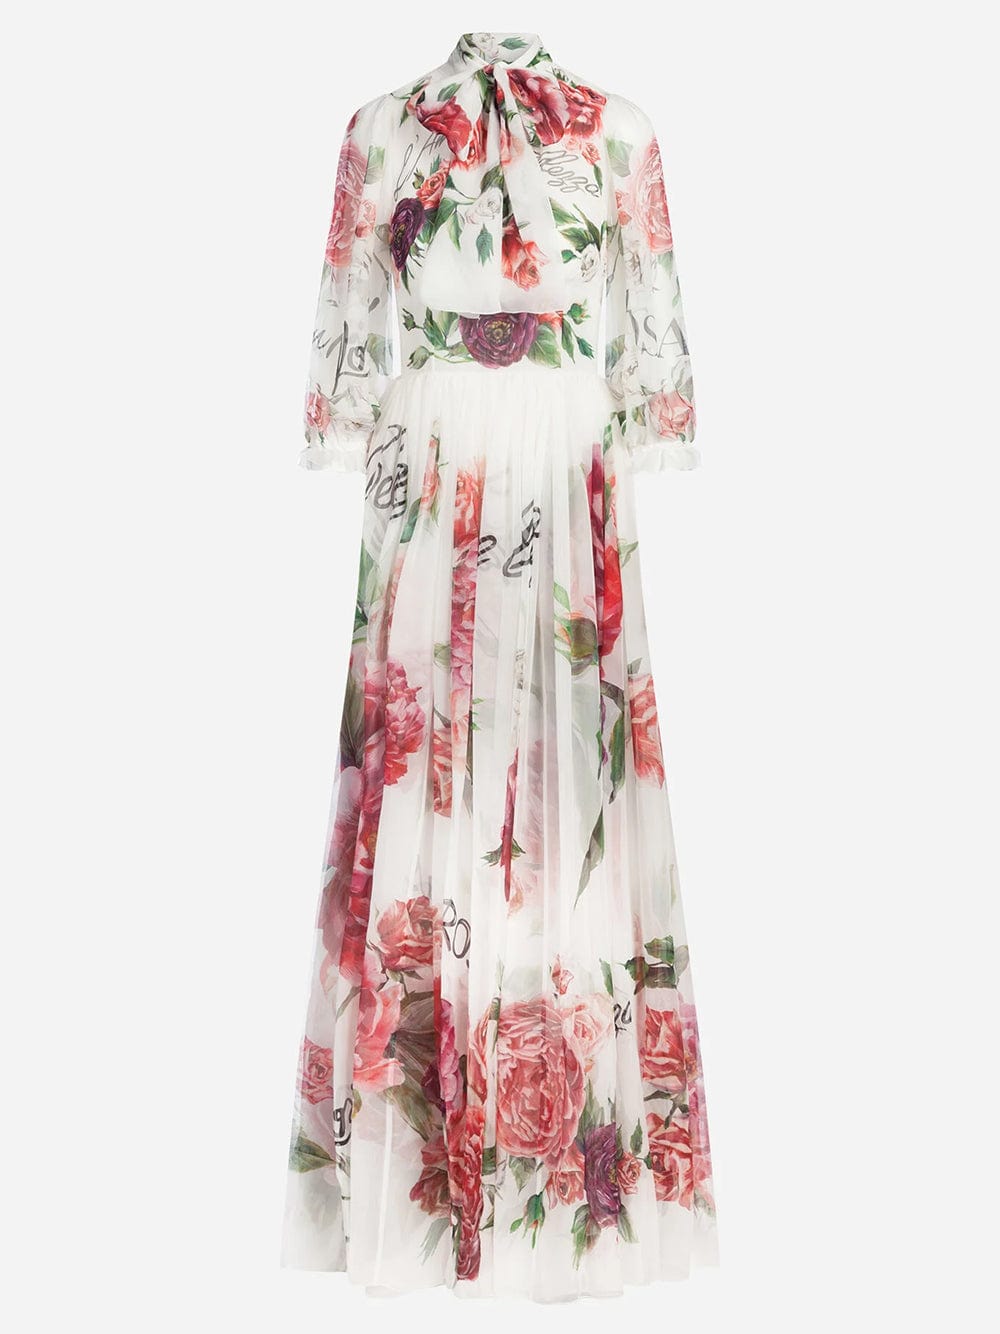 Dolce & Gabbana Peony-Print Floral Dress